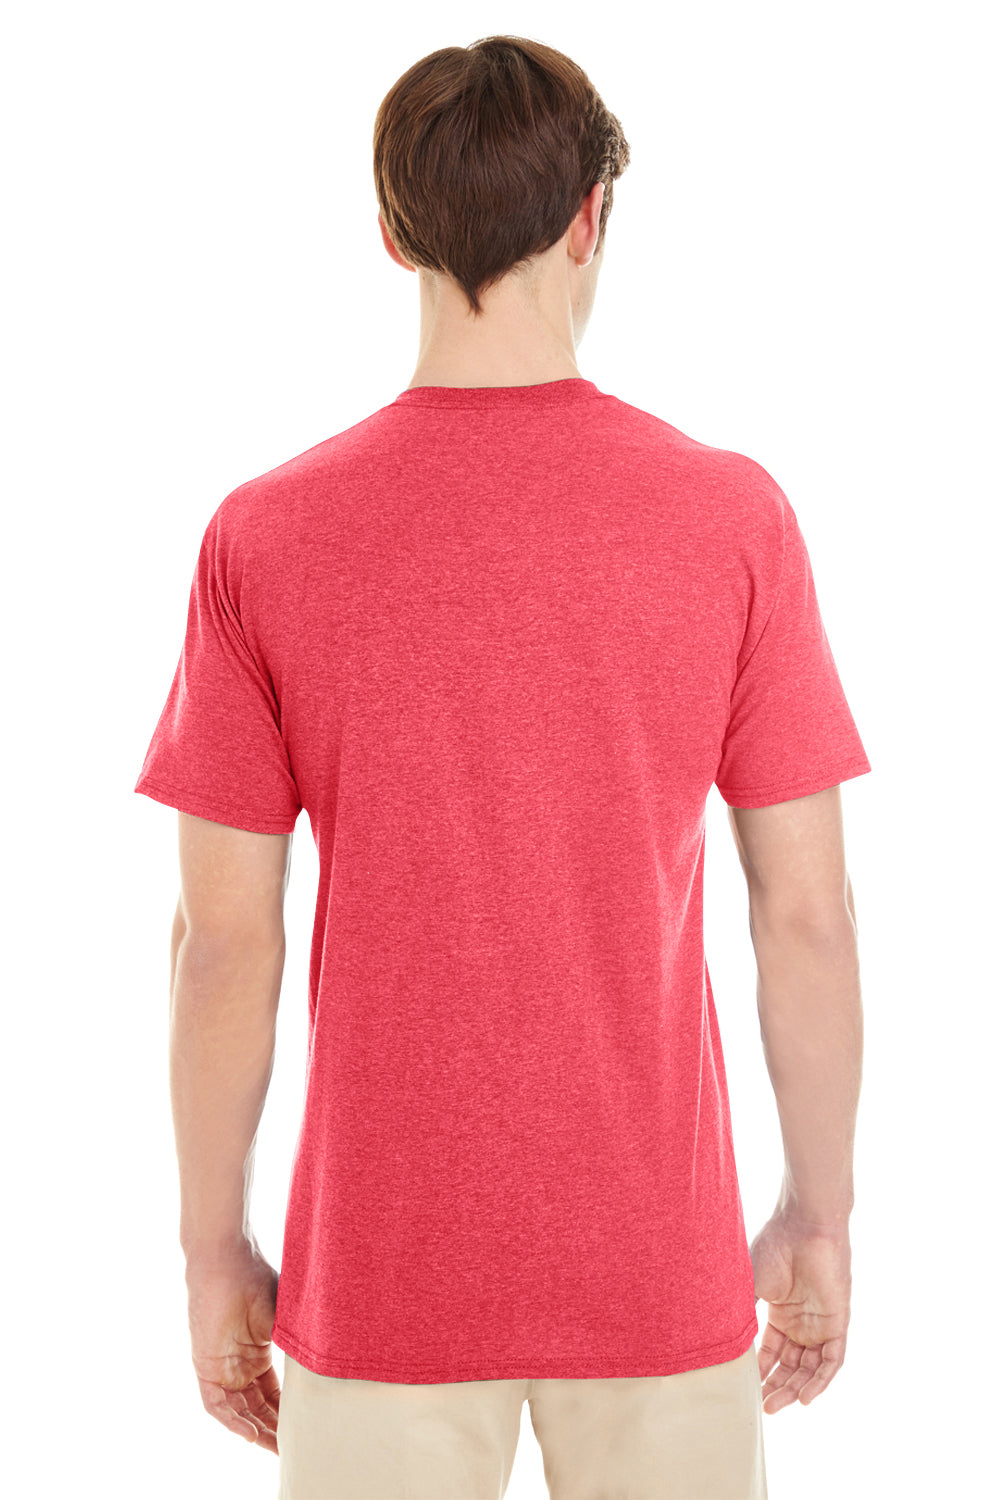 Jerzees 601MR Mens Short Sleeve Crewneck T-Shirt Heather Red Back